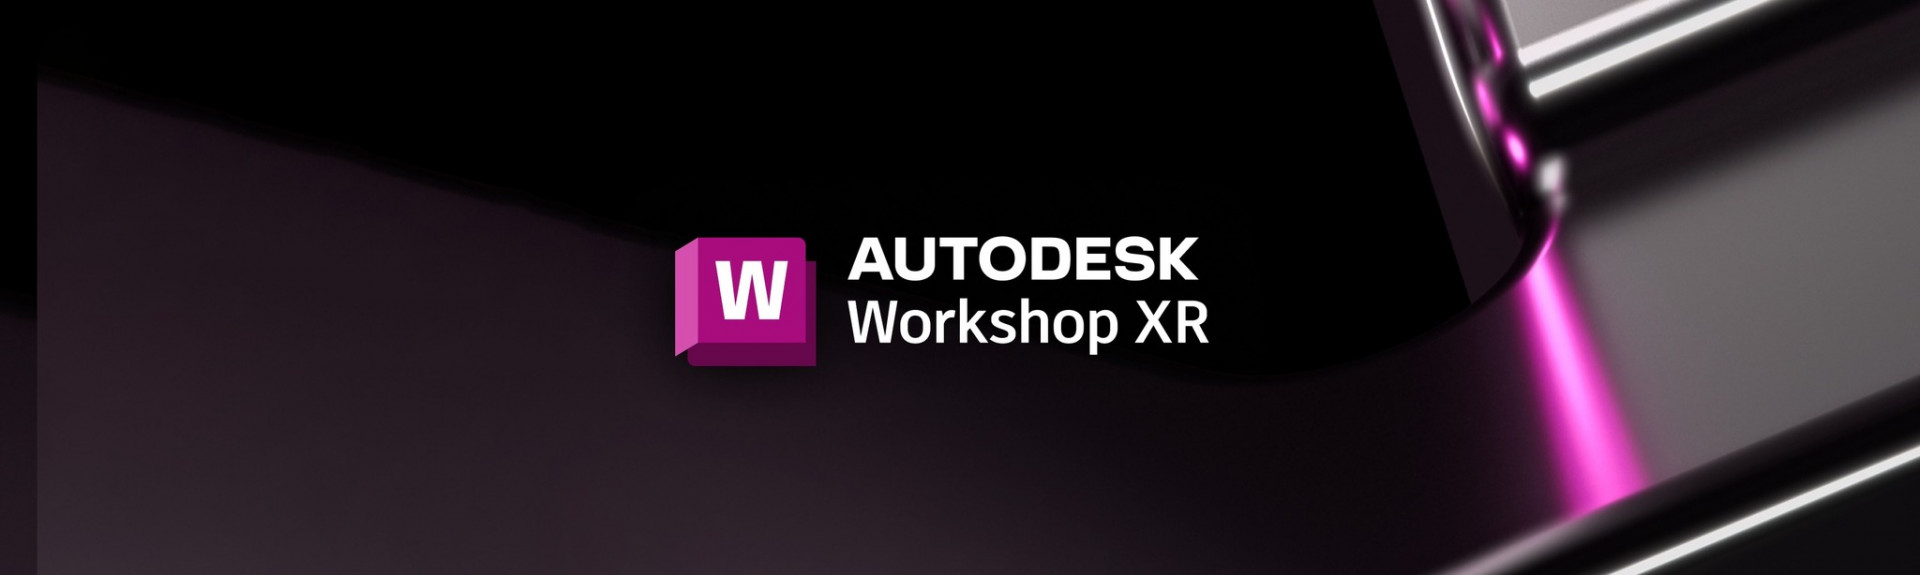 Autodesk Workshop XR